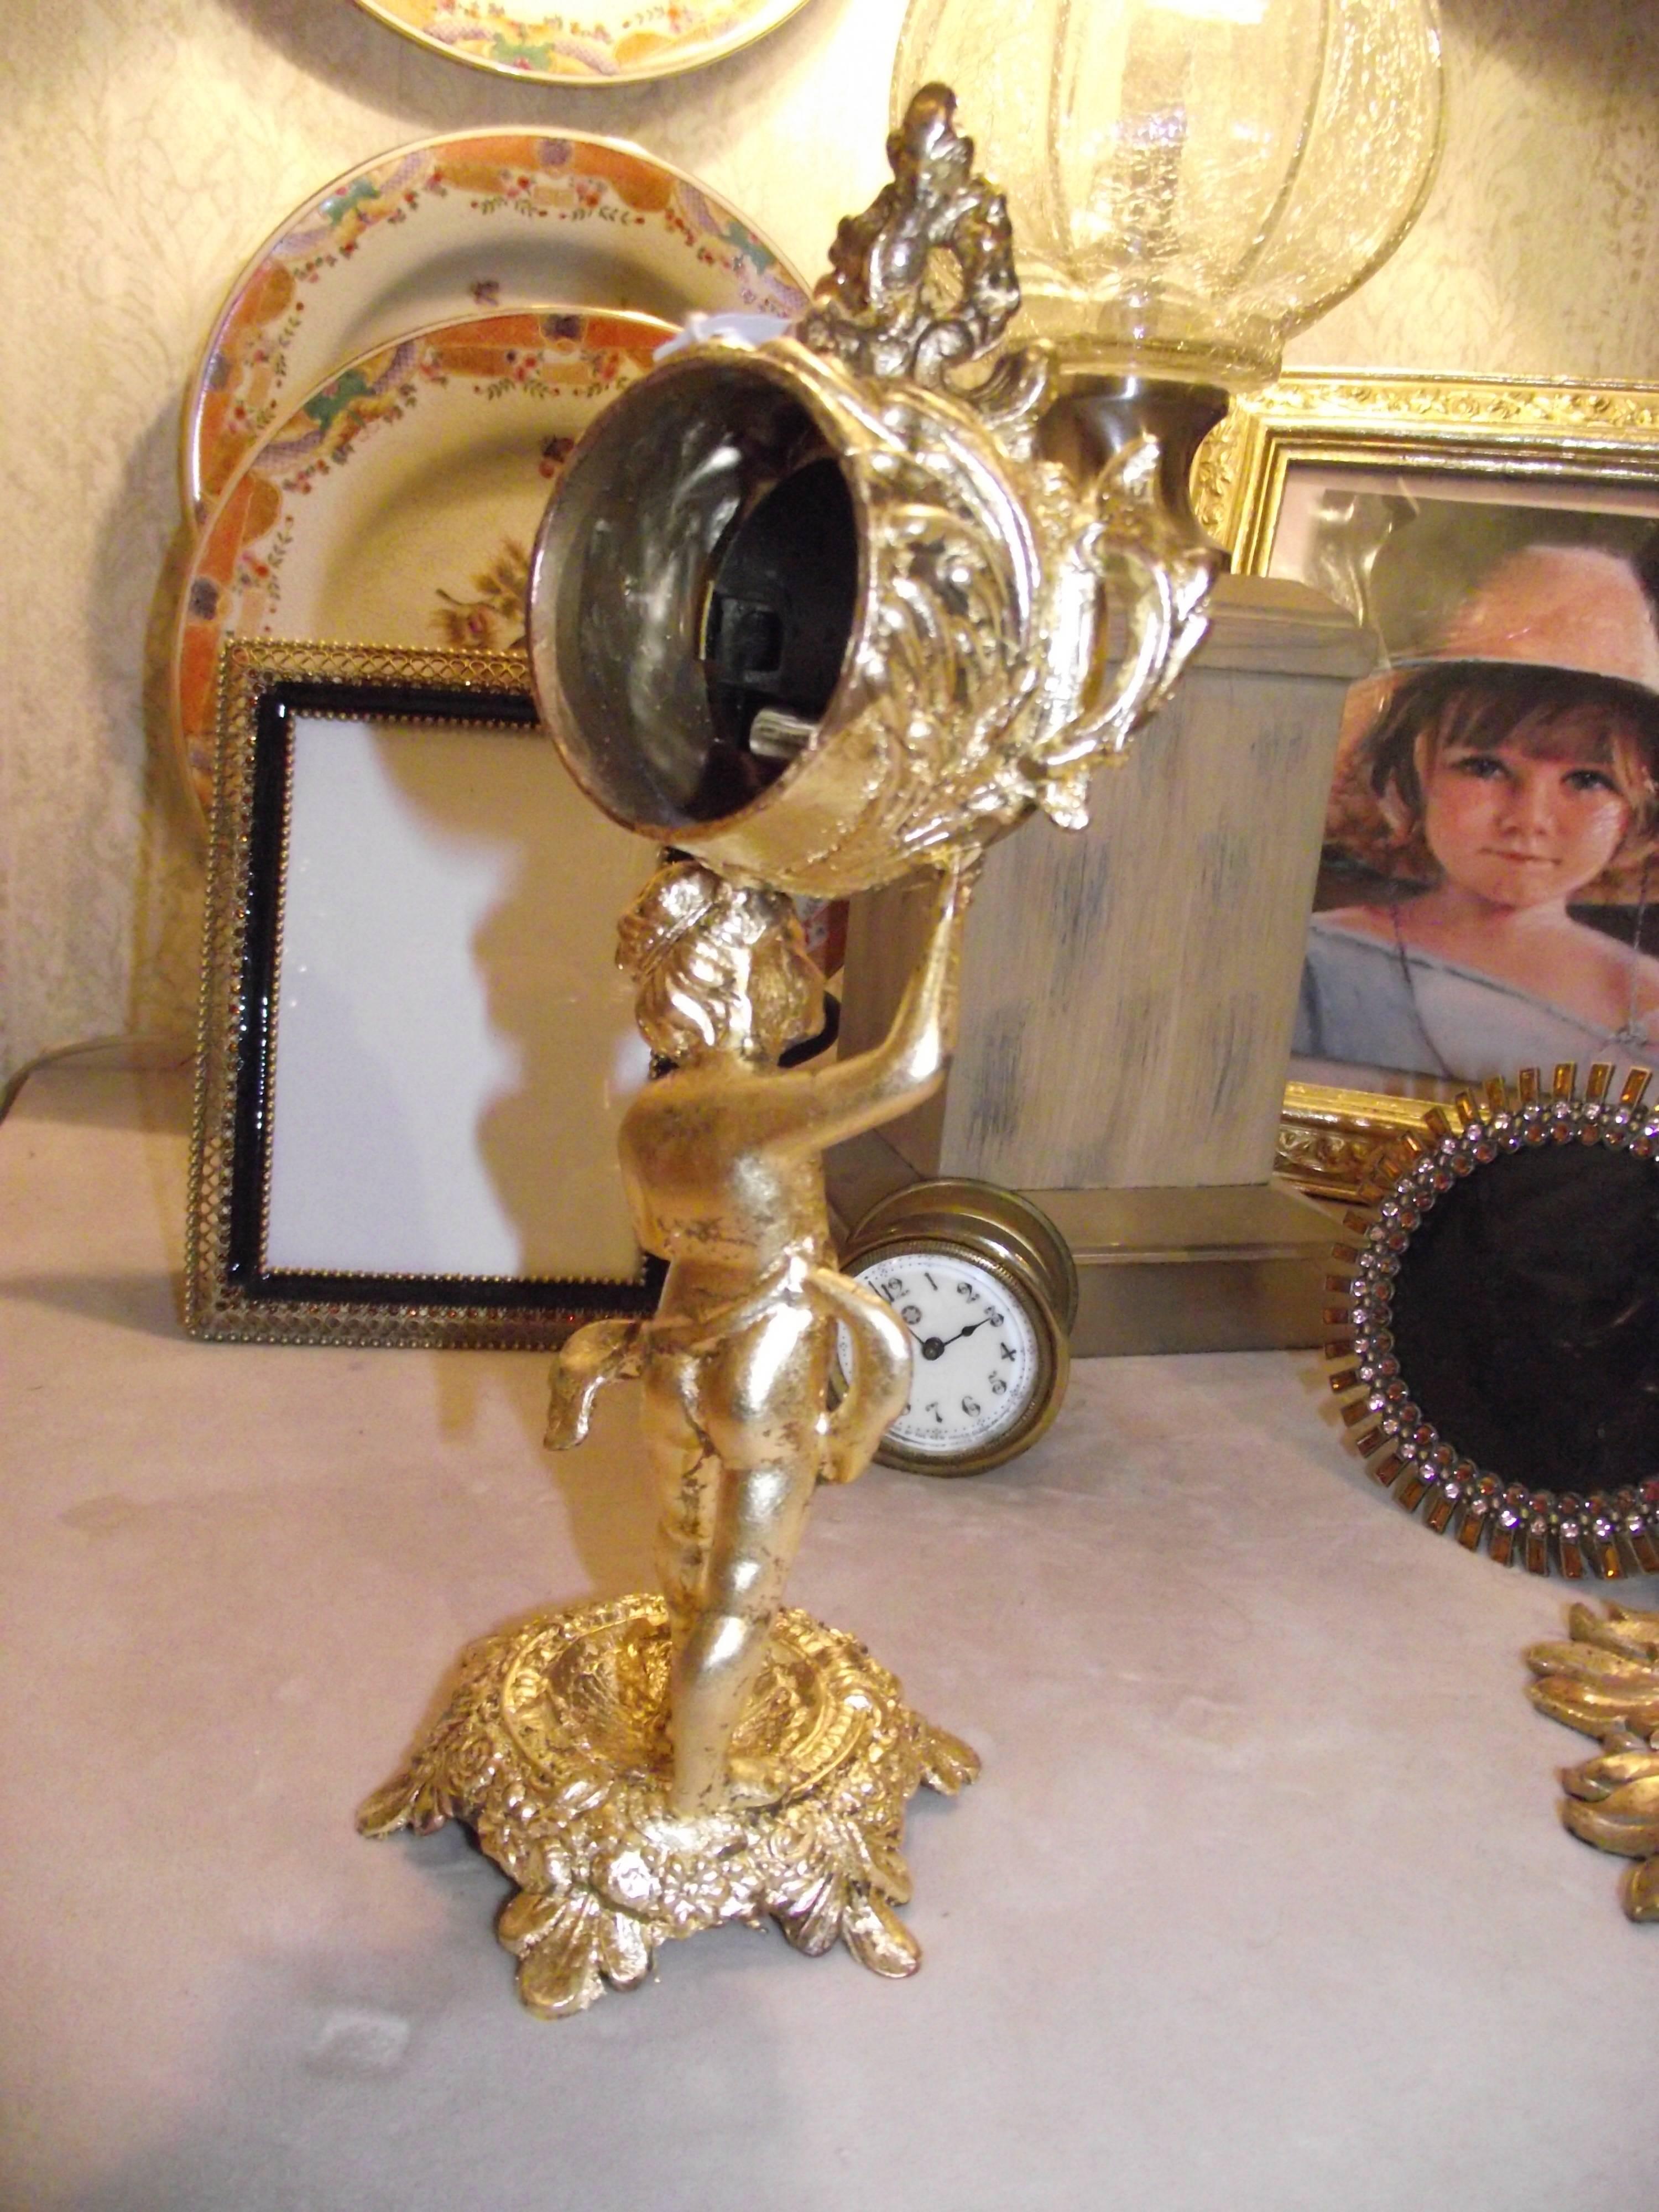 Art Nouveau Antique Cherub Clock, Desk Accessory, Vanity Accessory, Valentine gift